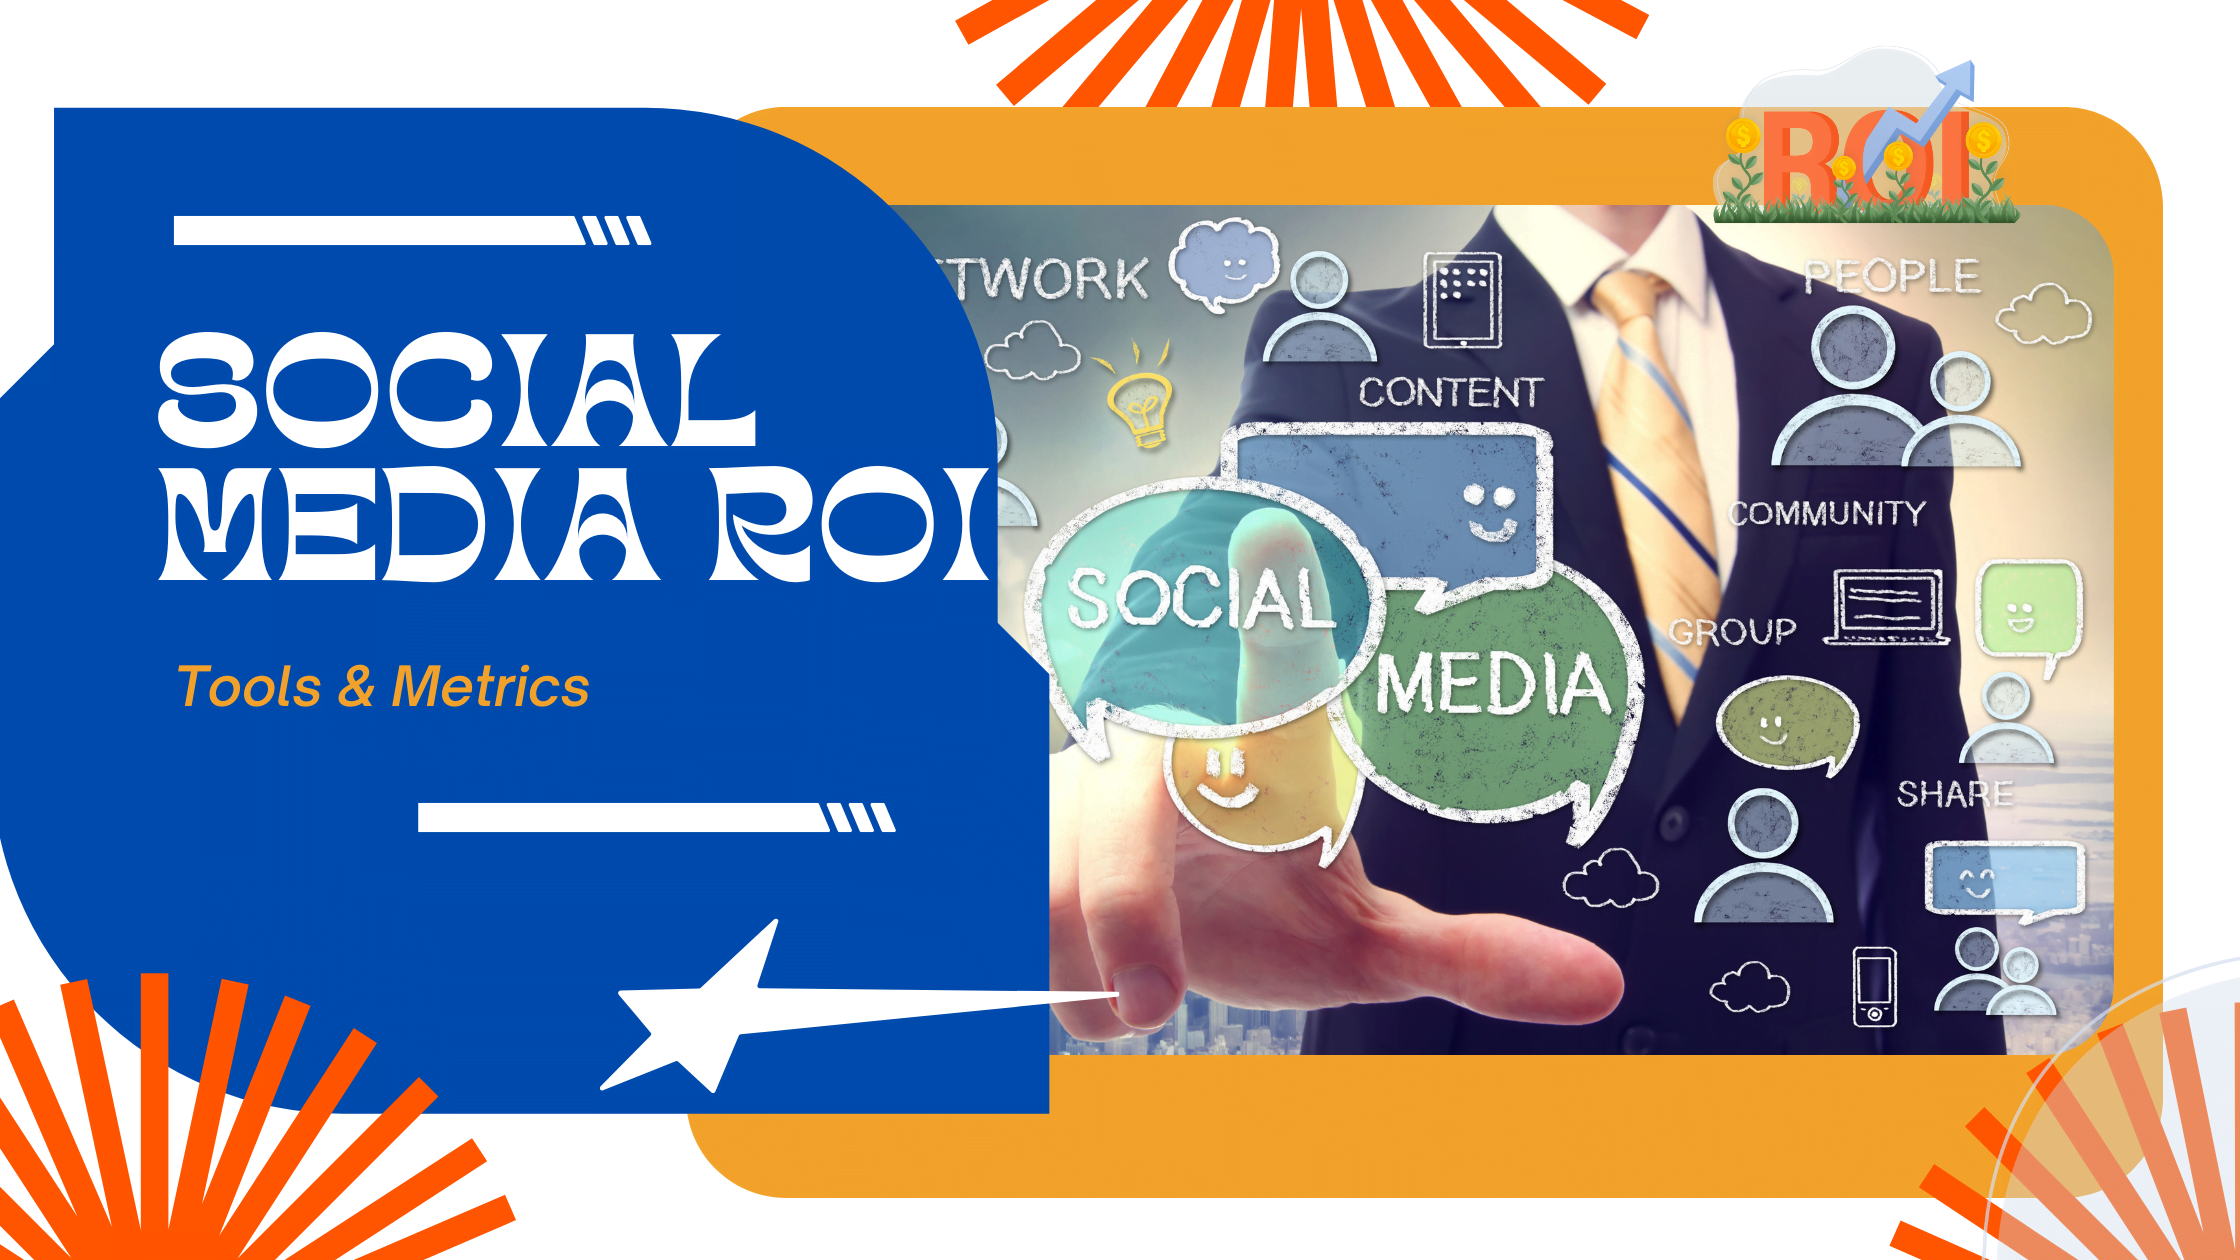 Social Media ROI: Tools & Metrics